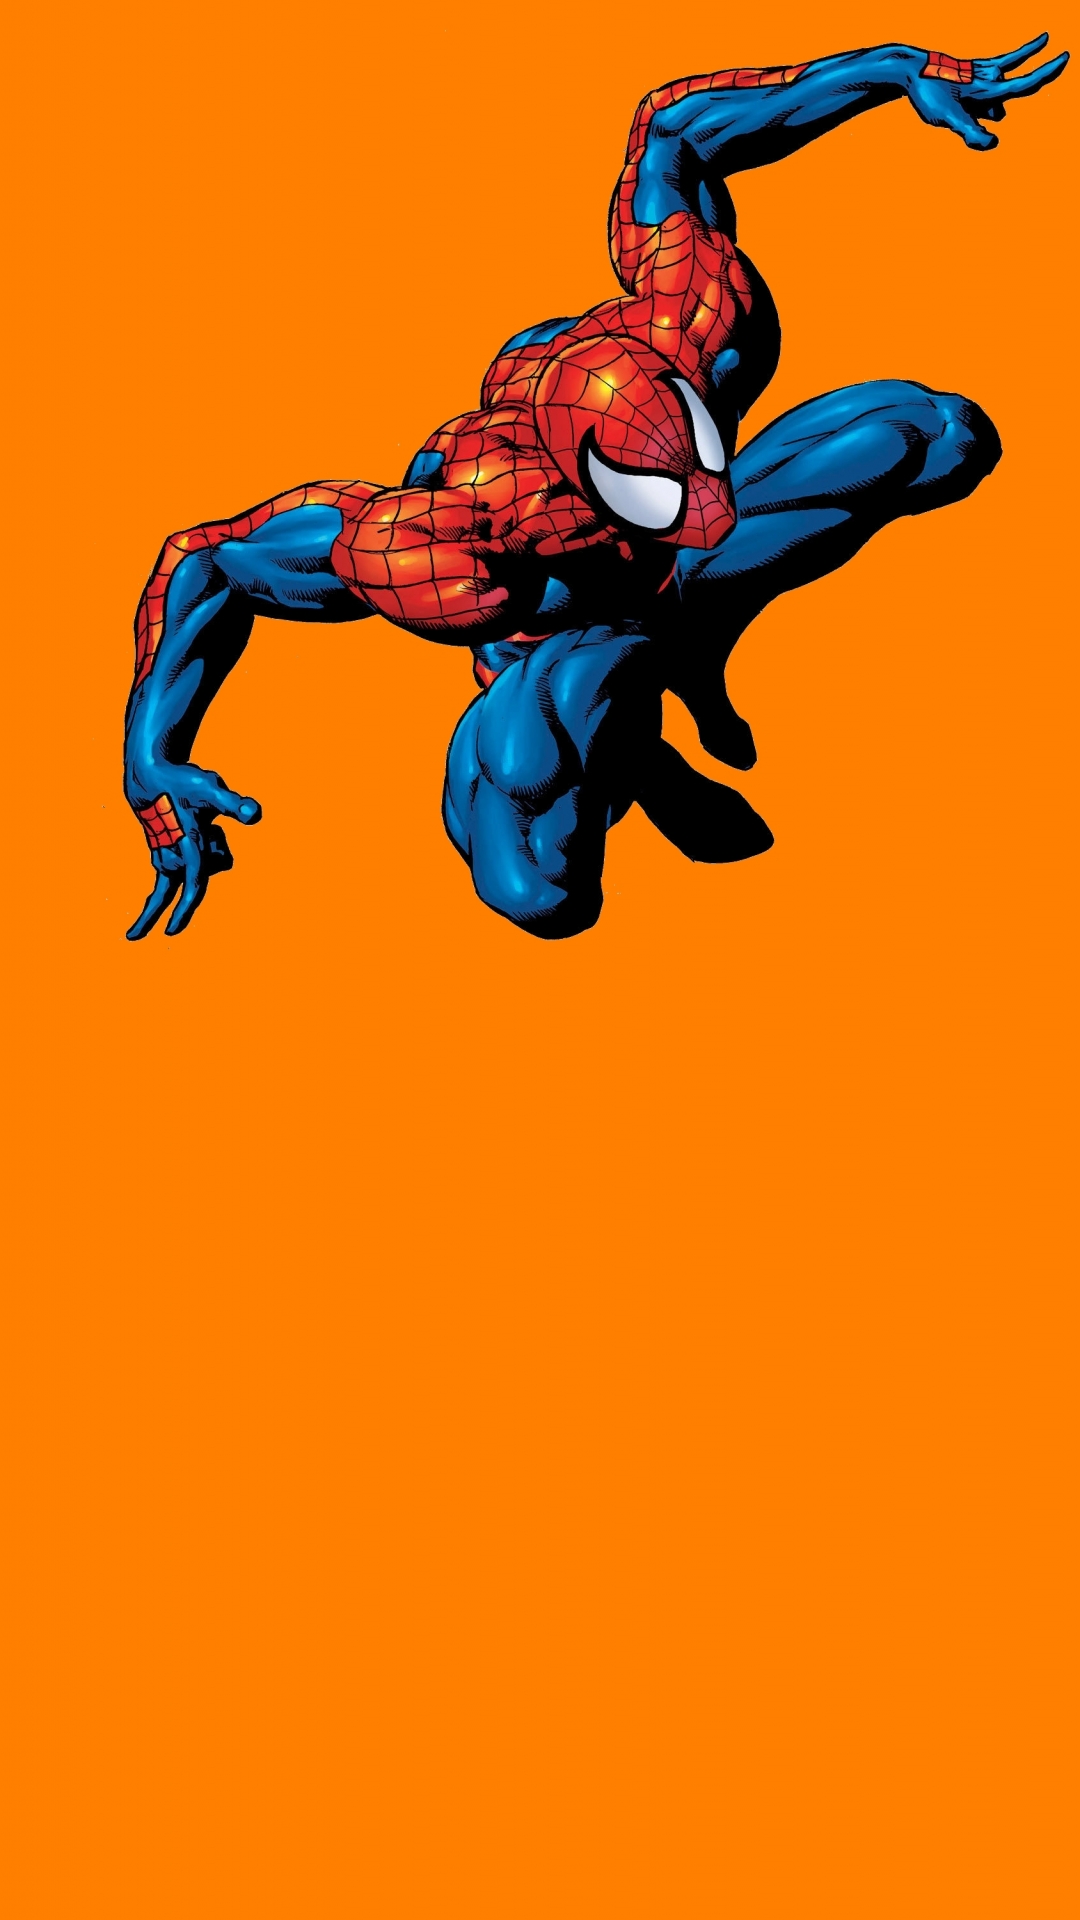 spiderman wallpaper hd,fictional character,superhero,spider man,hero,fiction